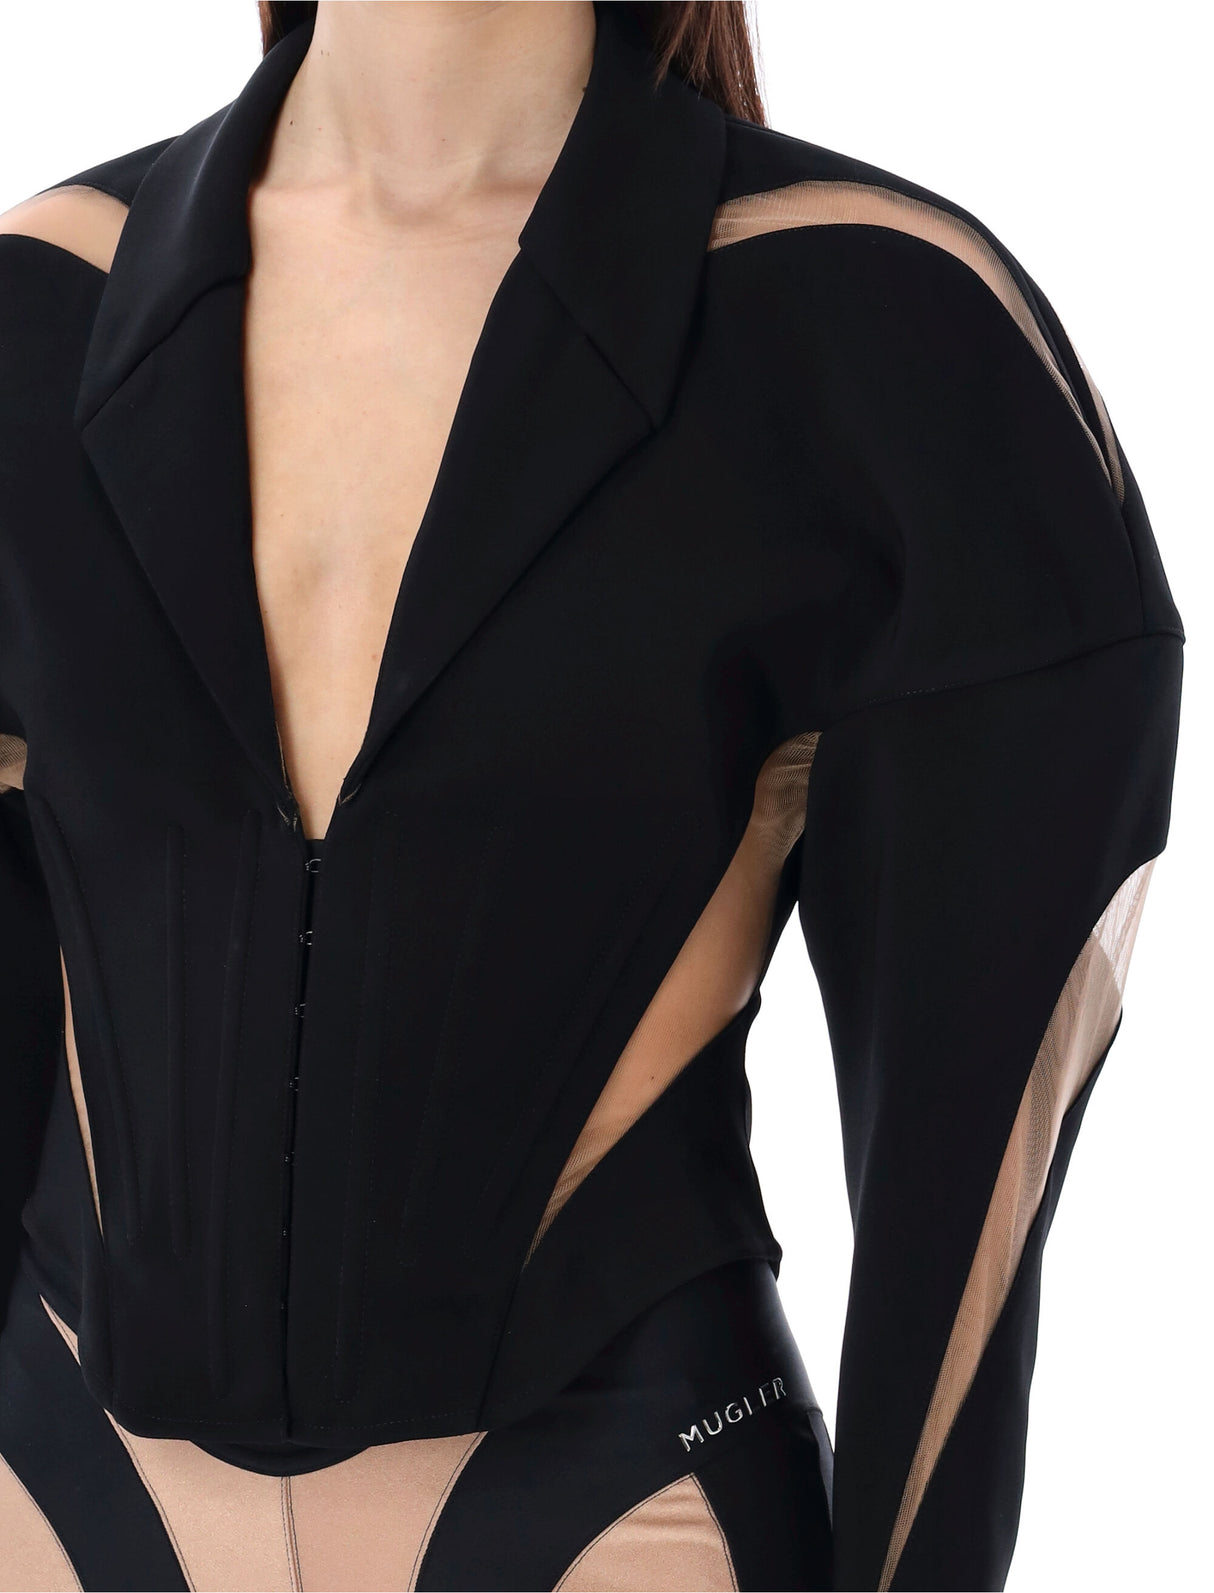 MUGLER Spiral Illusion Jacket - Women's Black Structured Jacket with Sheer Mesh and Corset Detail